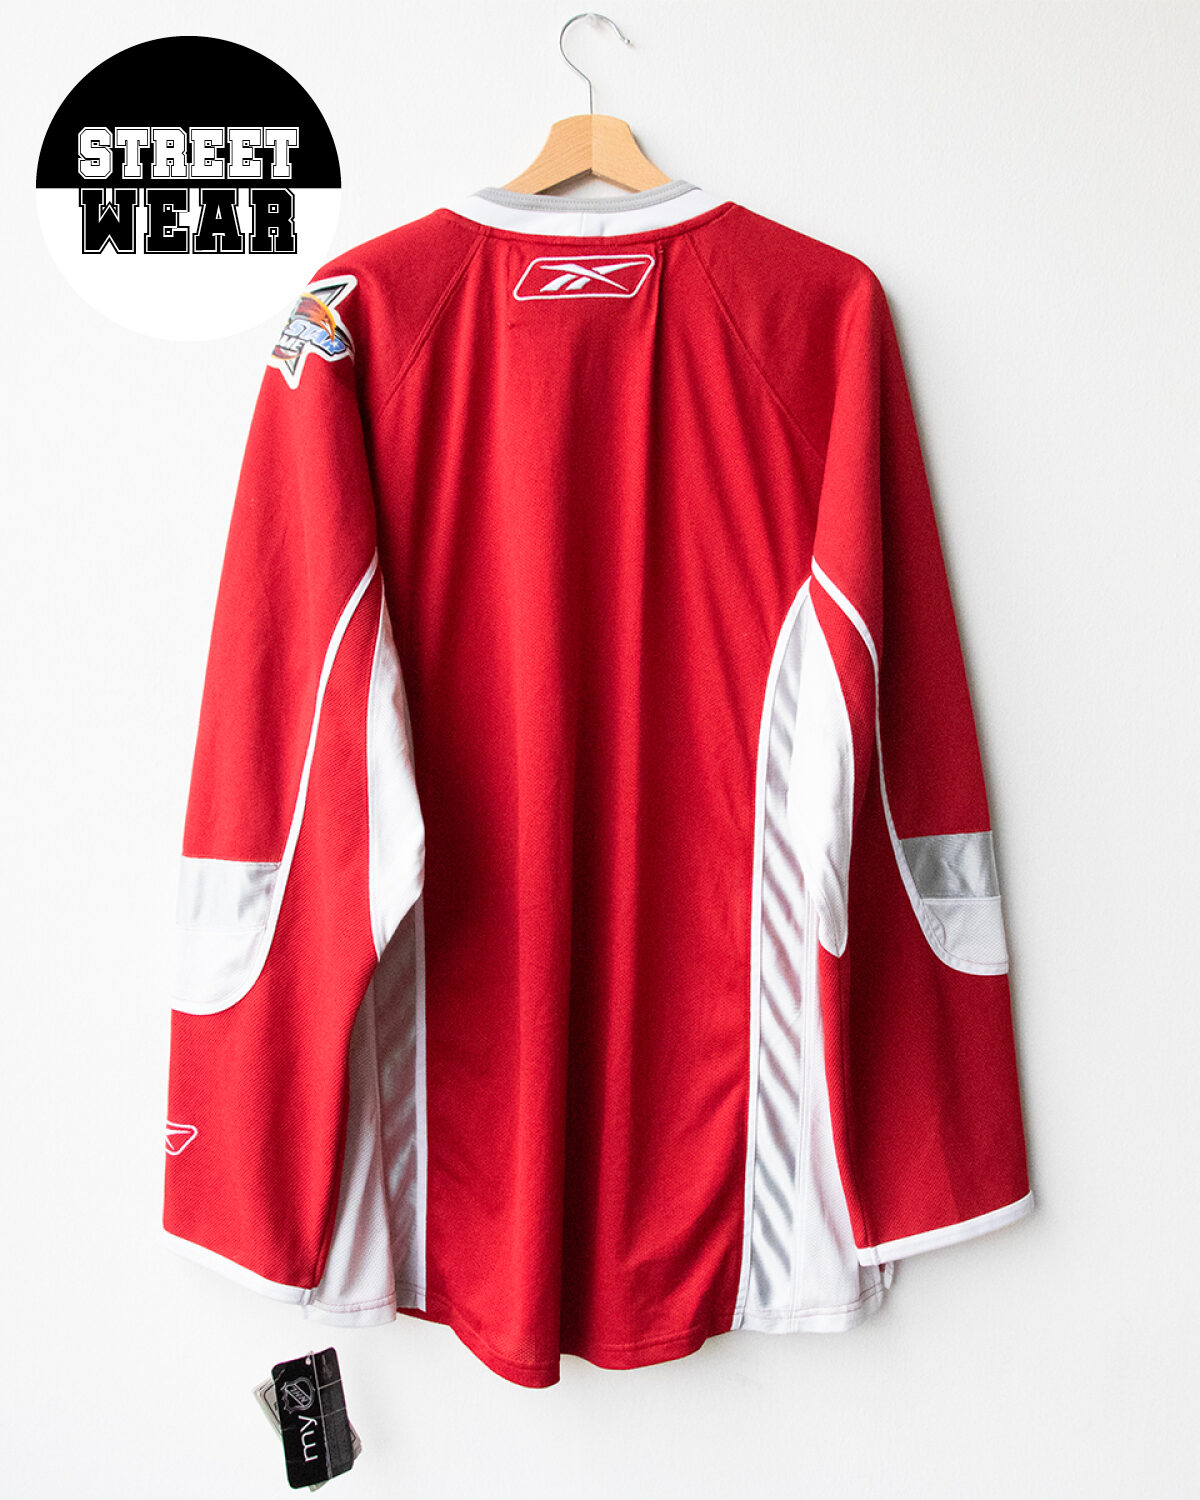 Reebok - East hockey tunic